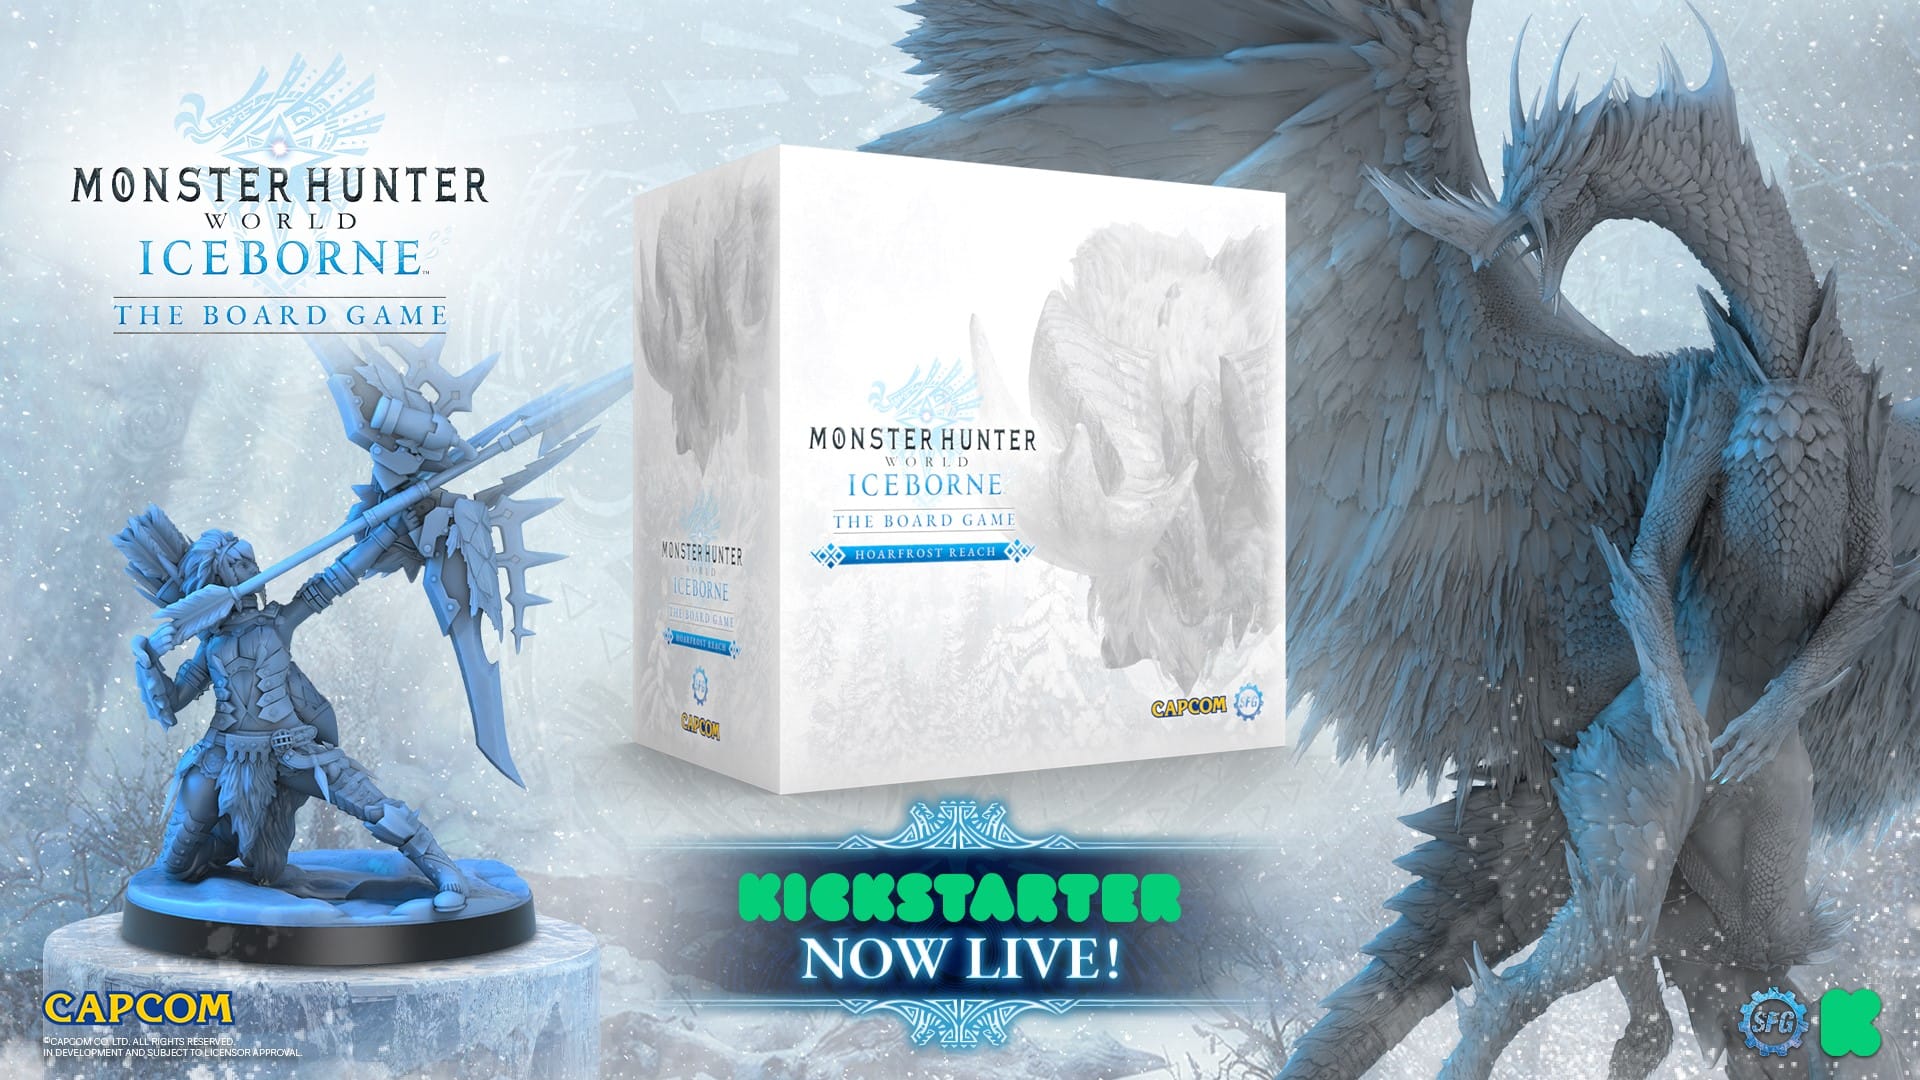 Monster Hunter World Iceborne: The Board Game Fully Funded On Kickstarter In Under 30 Minutes